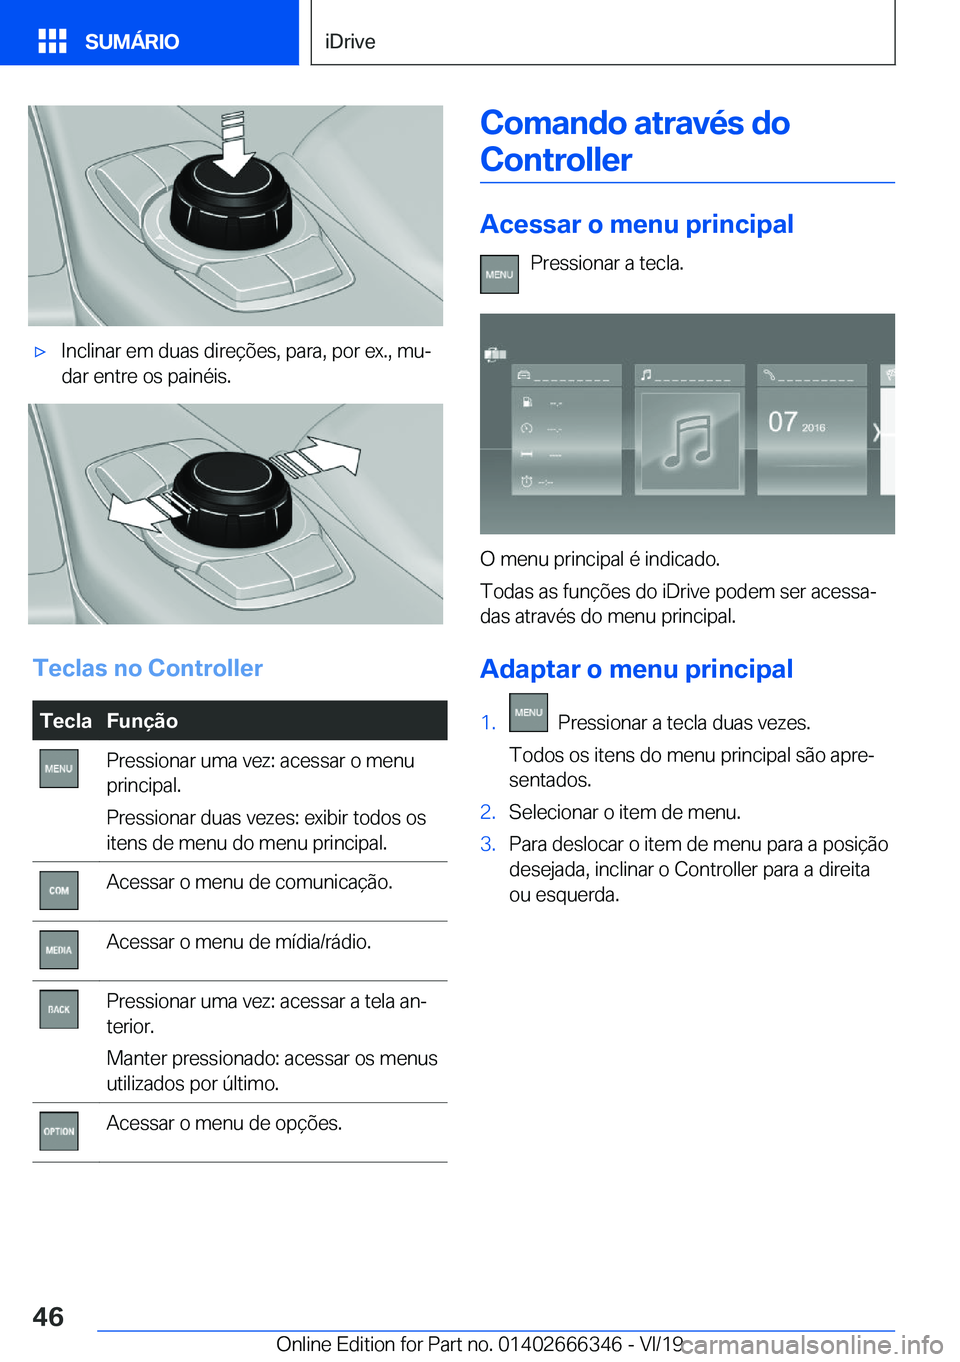 BMW 4 SERIES COUPE 2020  Manual do condutor (in Portuguese) x�I�n�c�l�i�n�a�r��e�m��d�u�a�s��d�i�r�e�